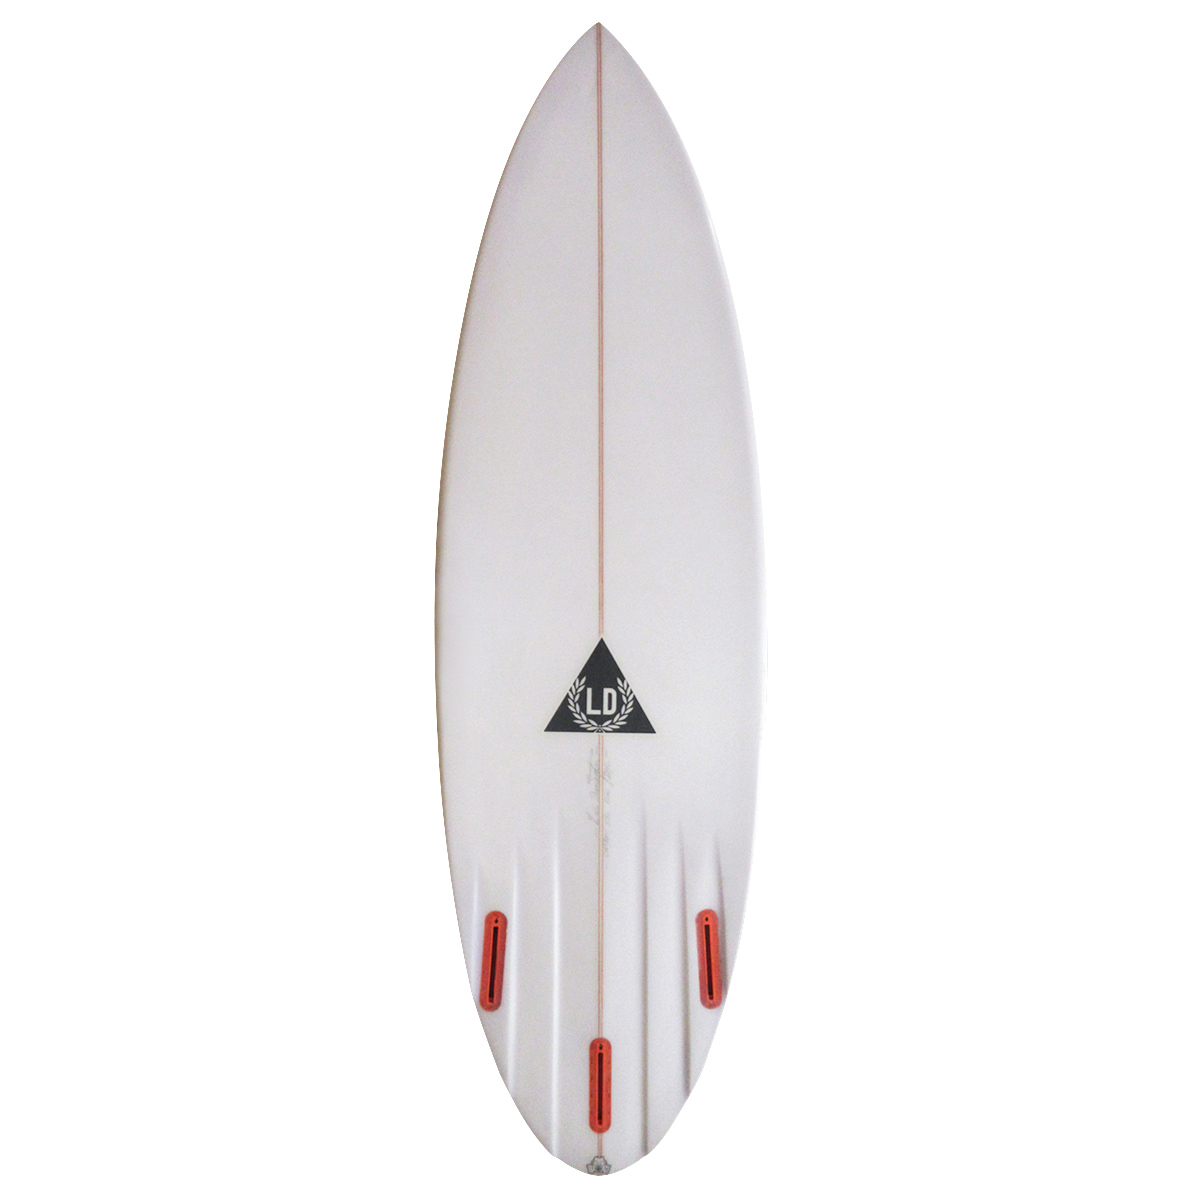 LD Surfboards / Custom 4 Channel Thruster 